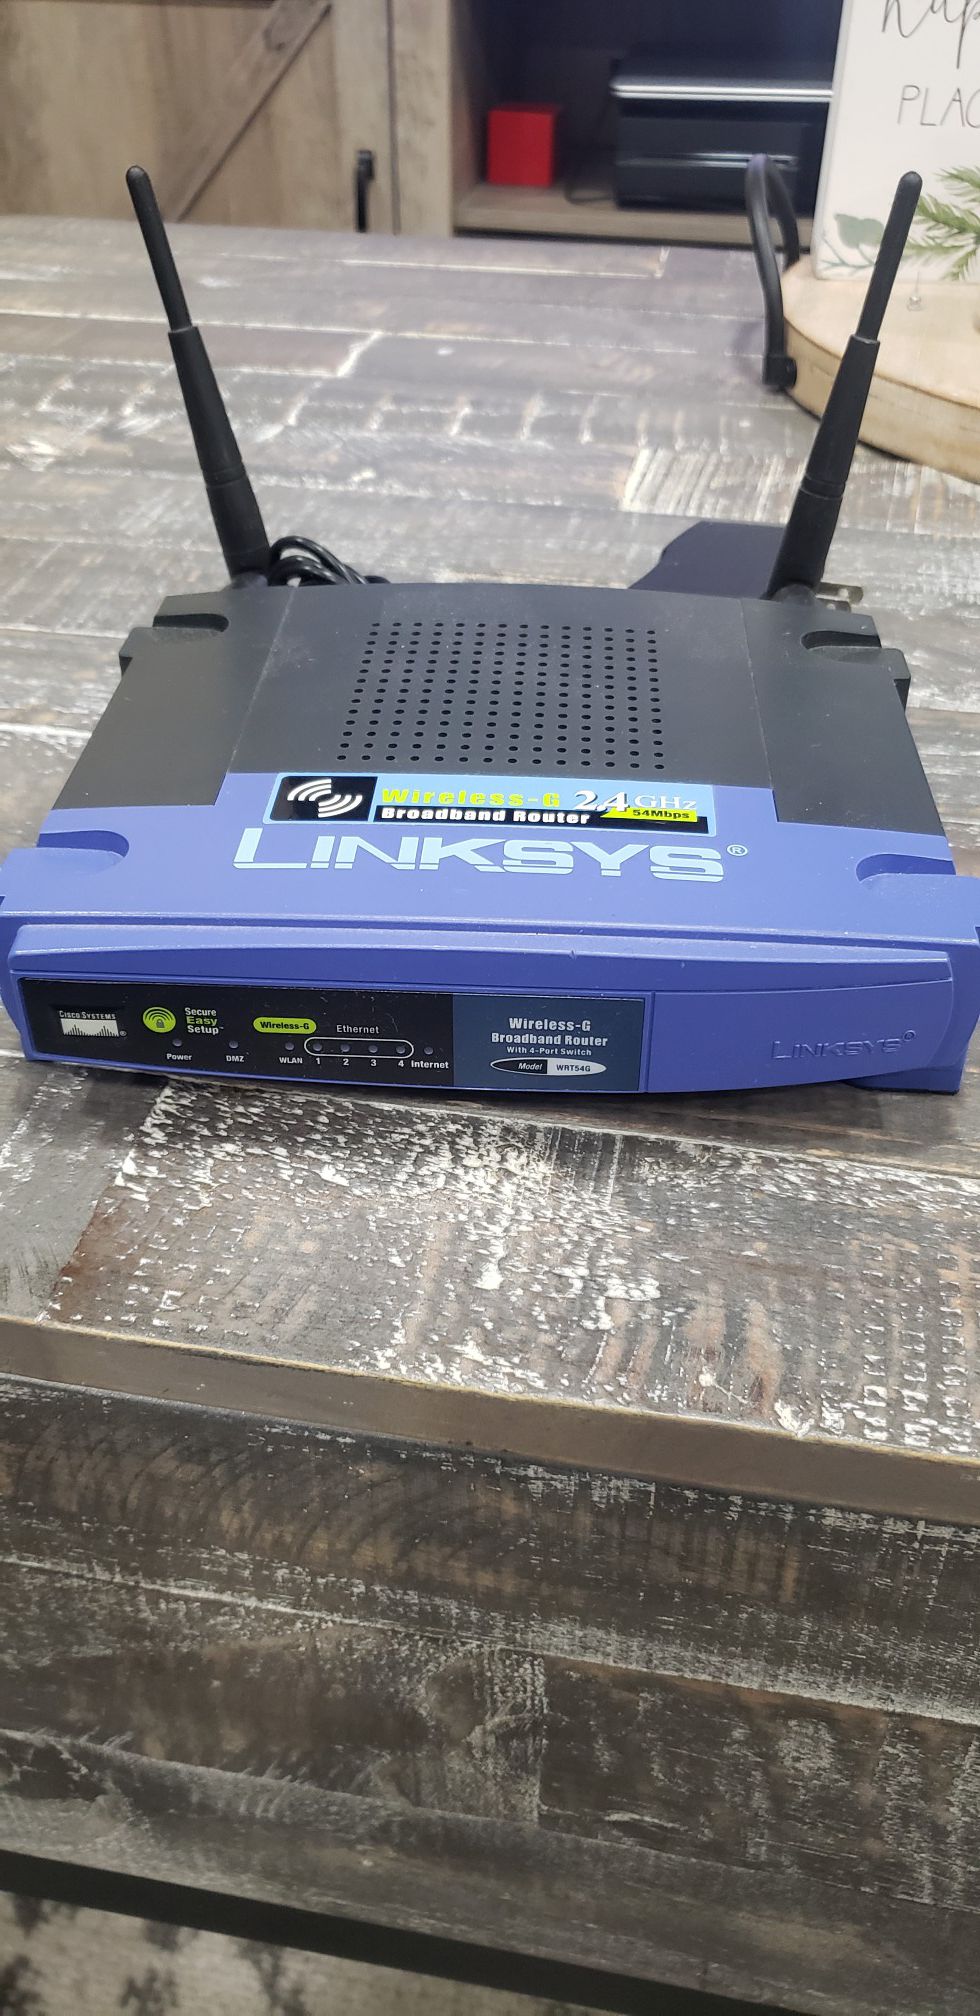 Linksys Wireless Broadband Router WRT54G v.4